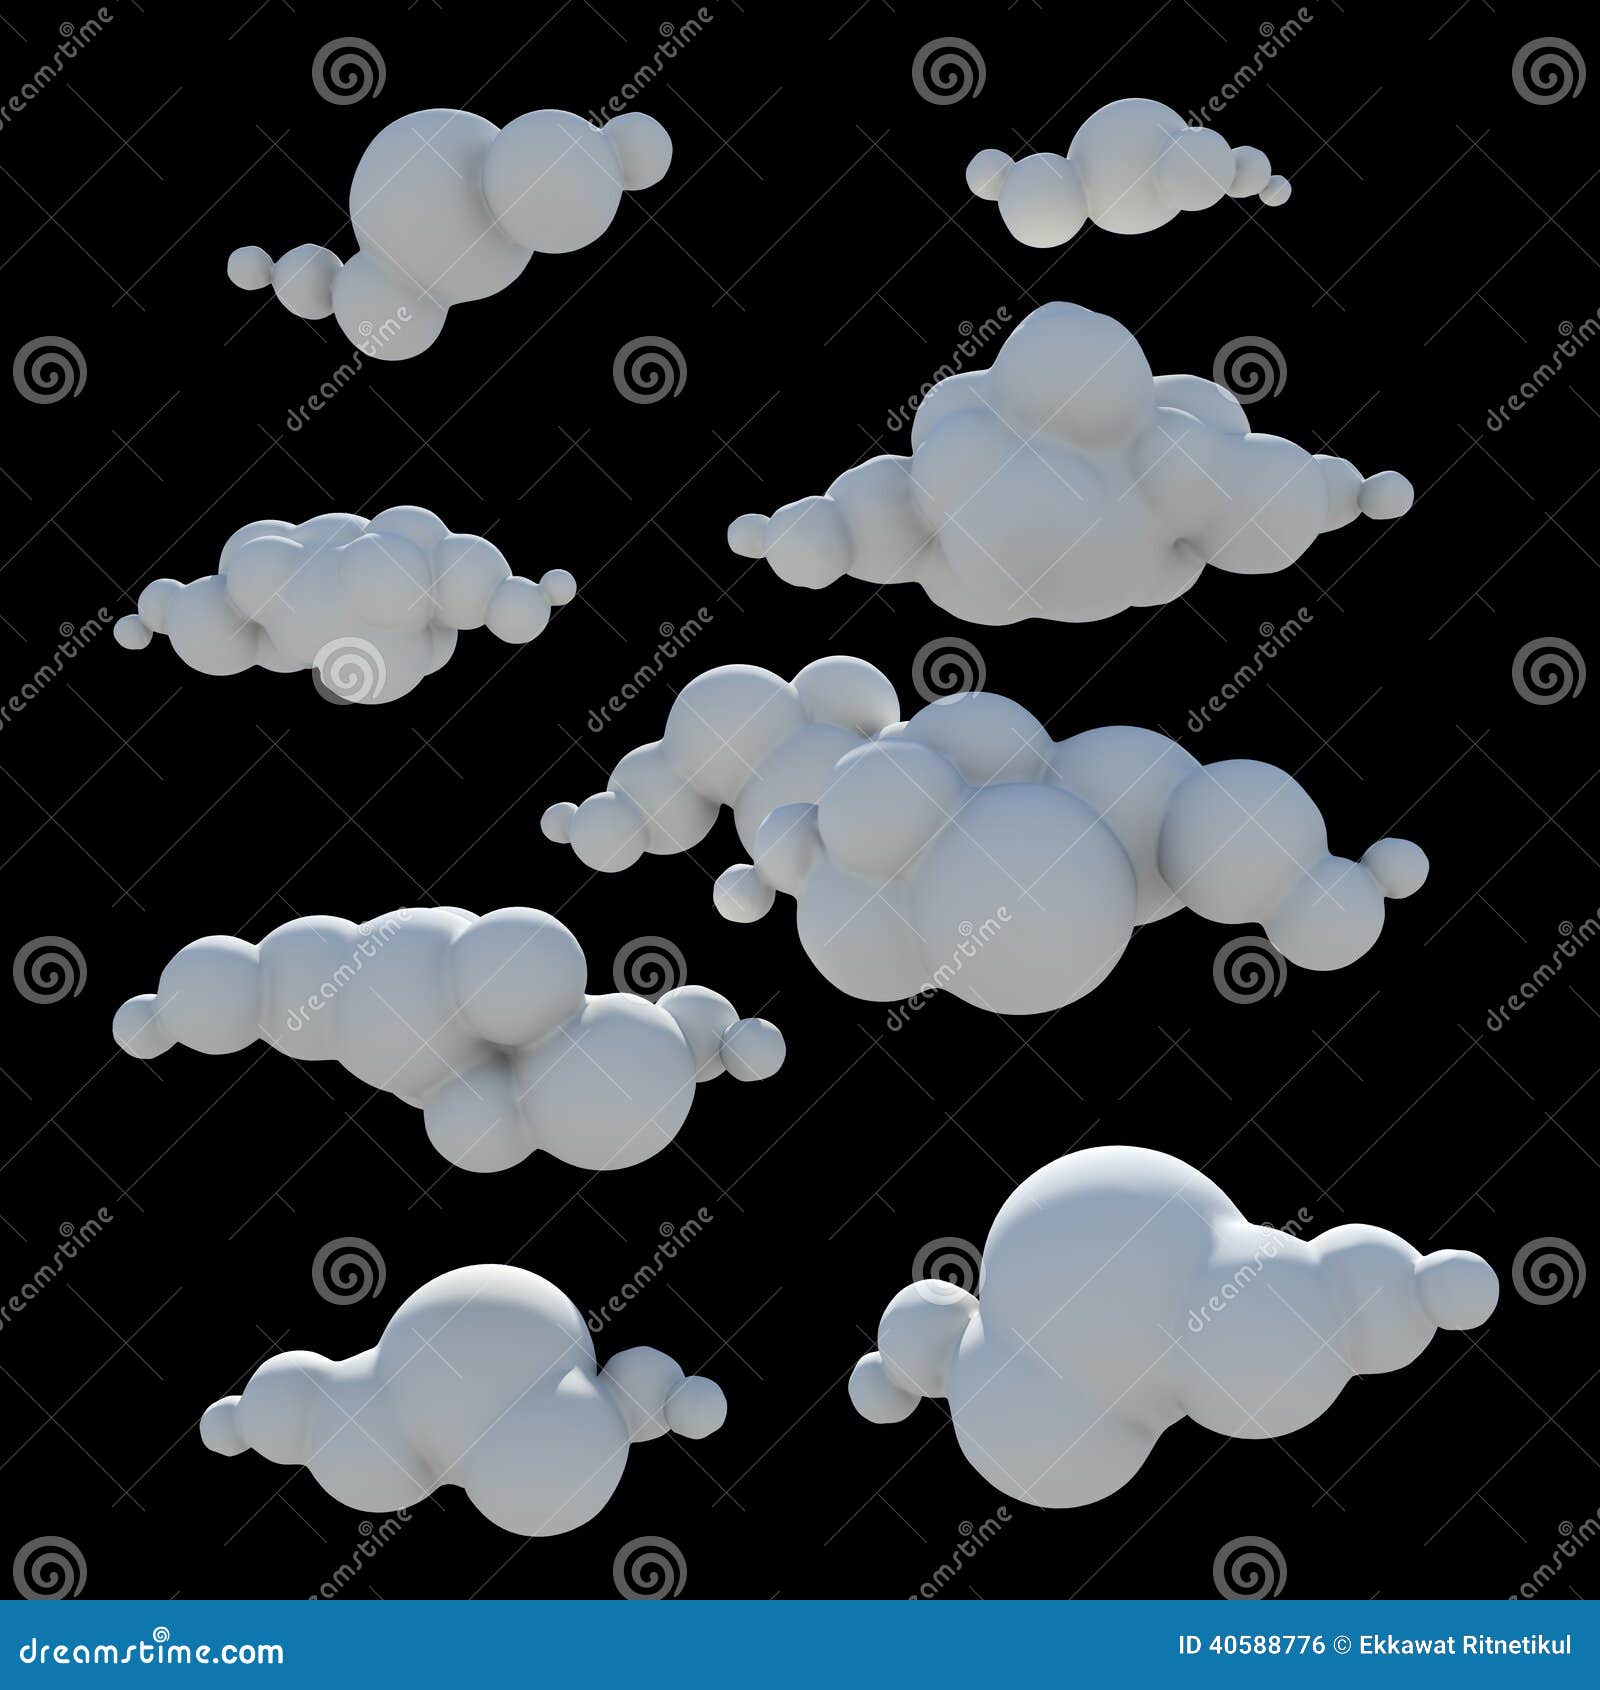 Cartoon Clouds, Design Element, PNG Transparent Background Stock Photo -  Illustration of blue, light: 40588776